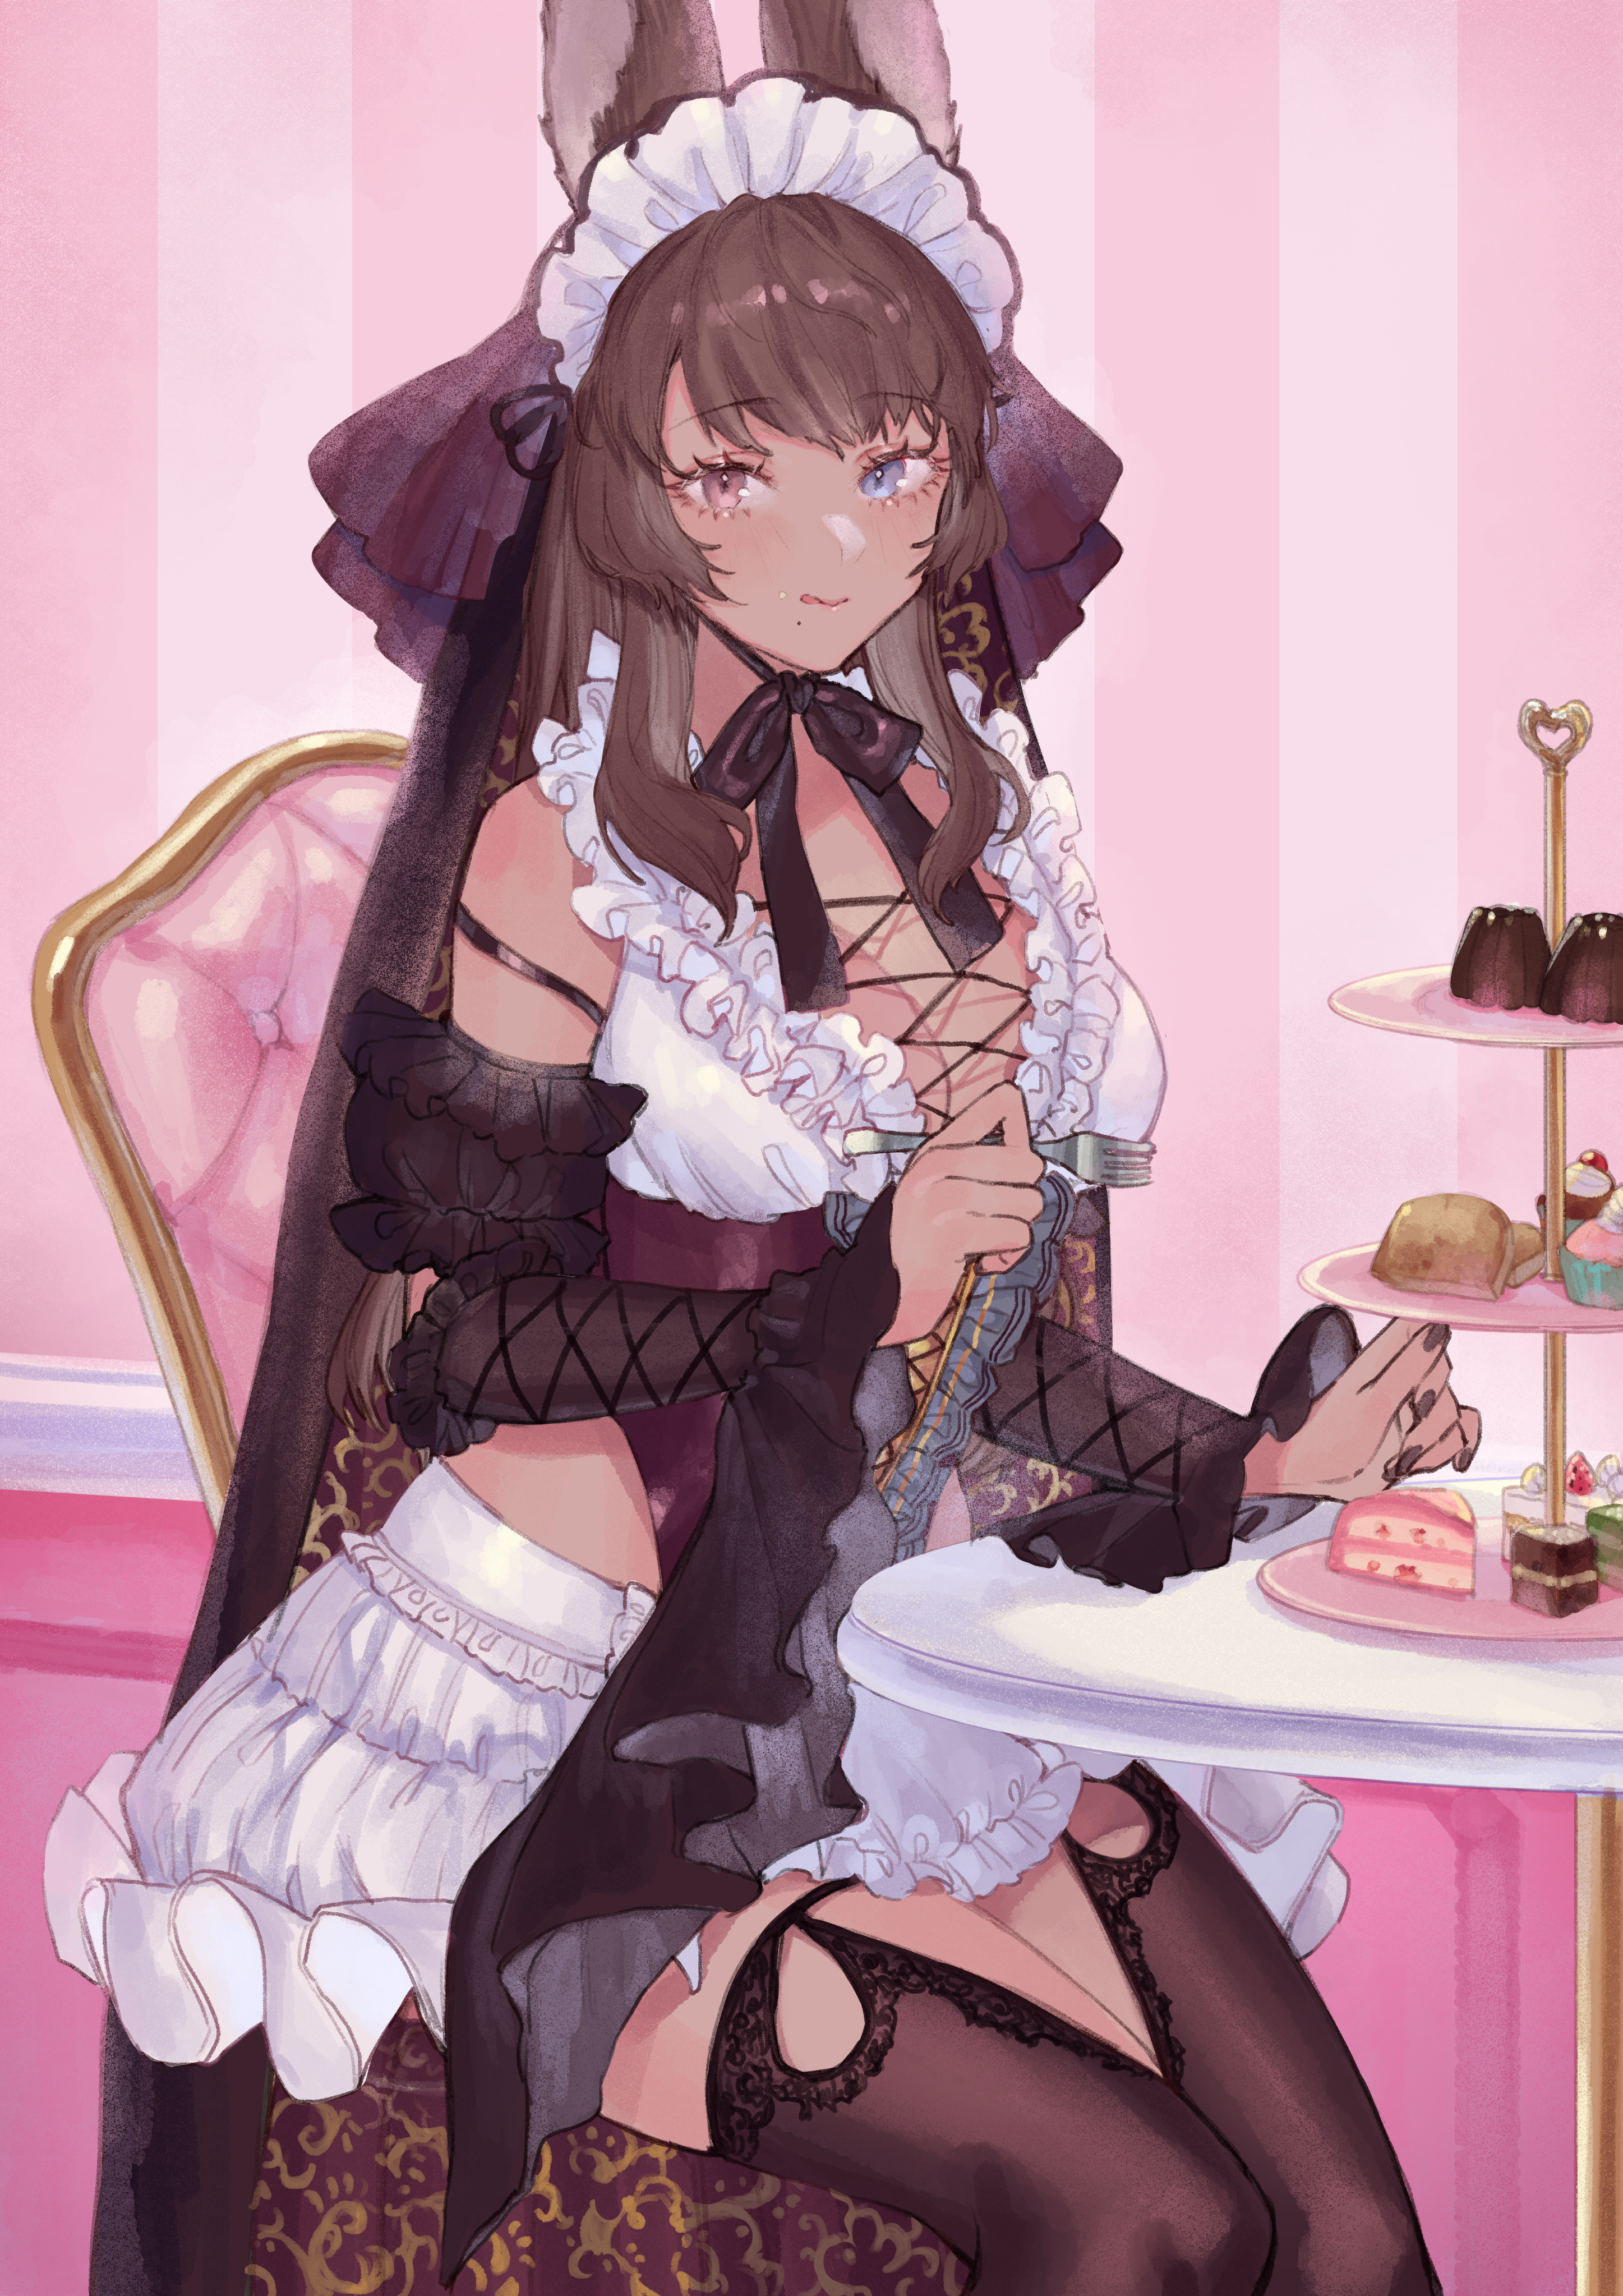 Anime 2894x4093 Final Fantasy animal ears dark skin anime girls maid maid outfit cake sweets stockings heterochromia